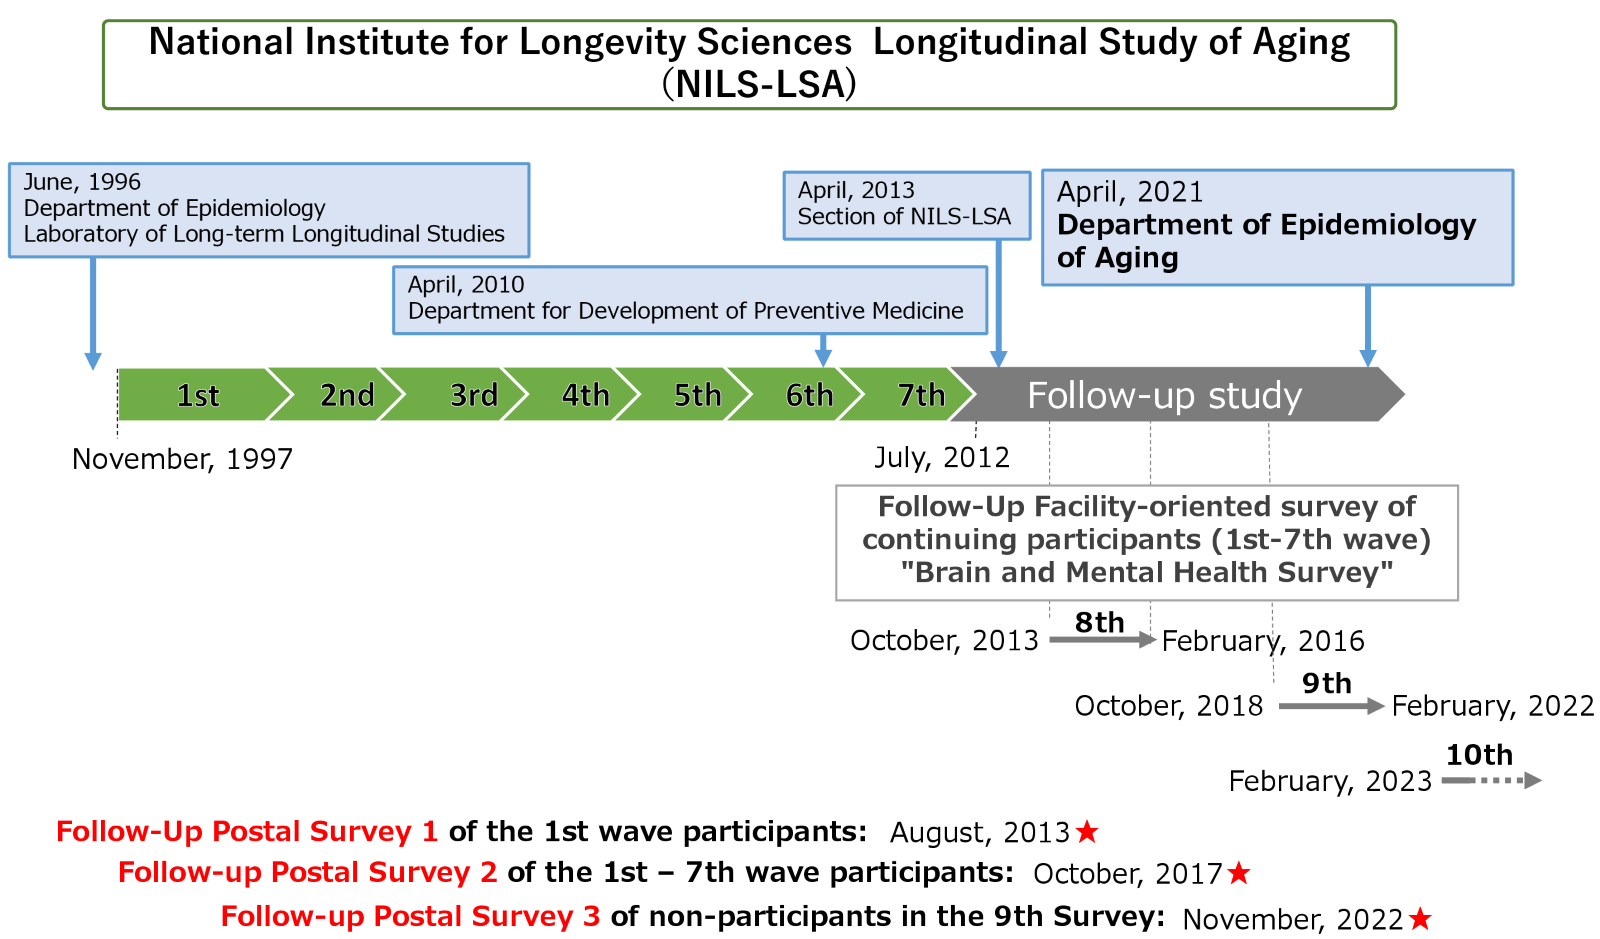 History of National Institute for Longevity Sciences Longitudinal Study of Aging (NILS-LSA)